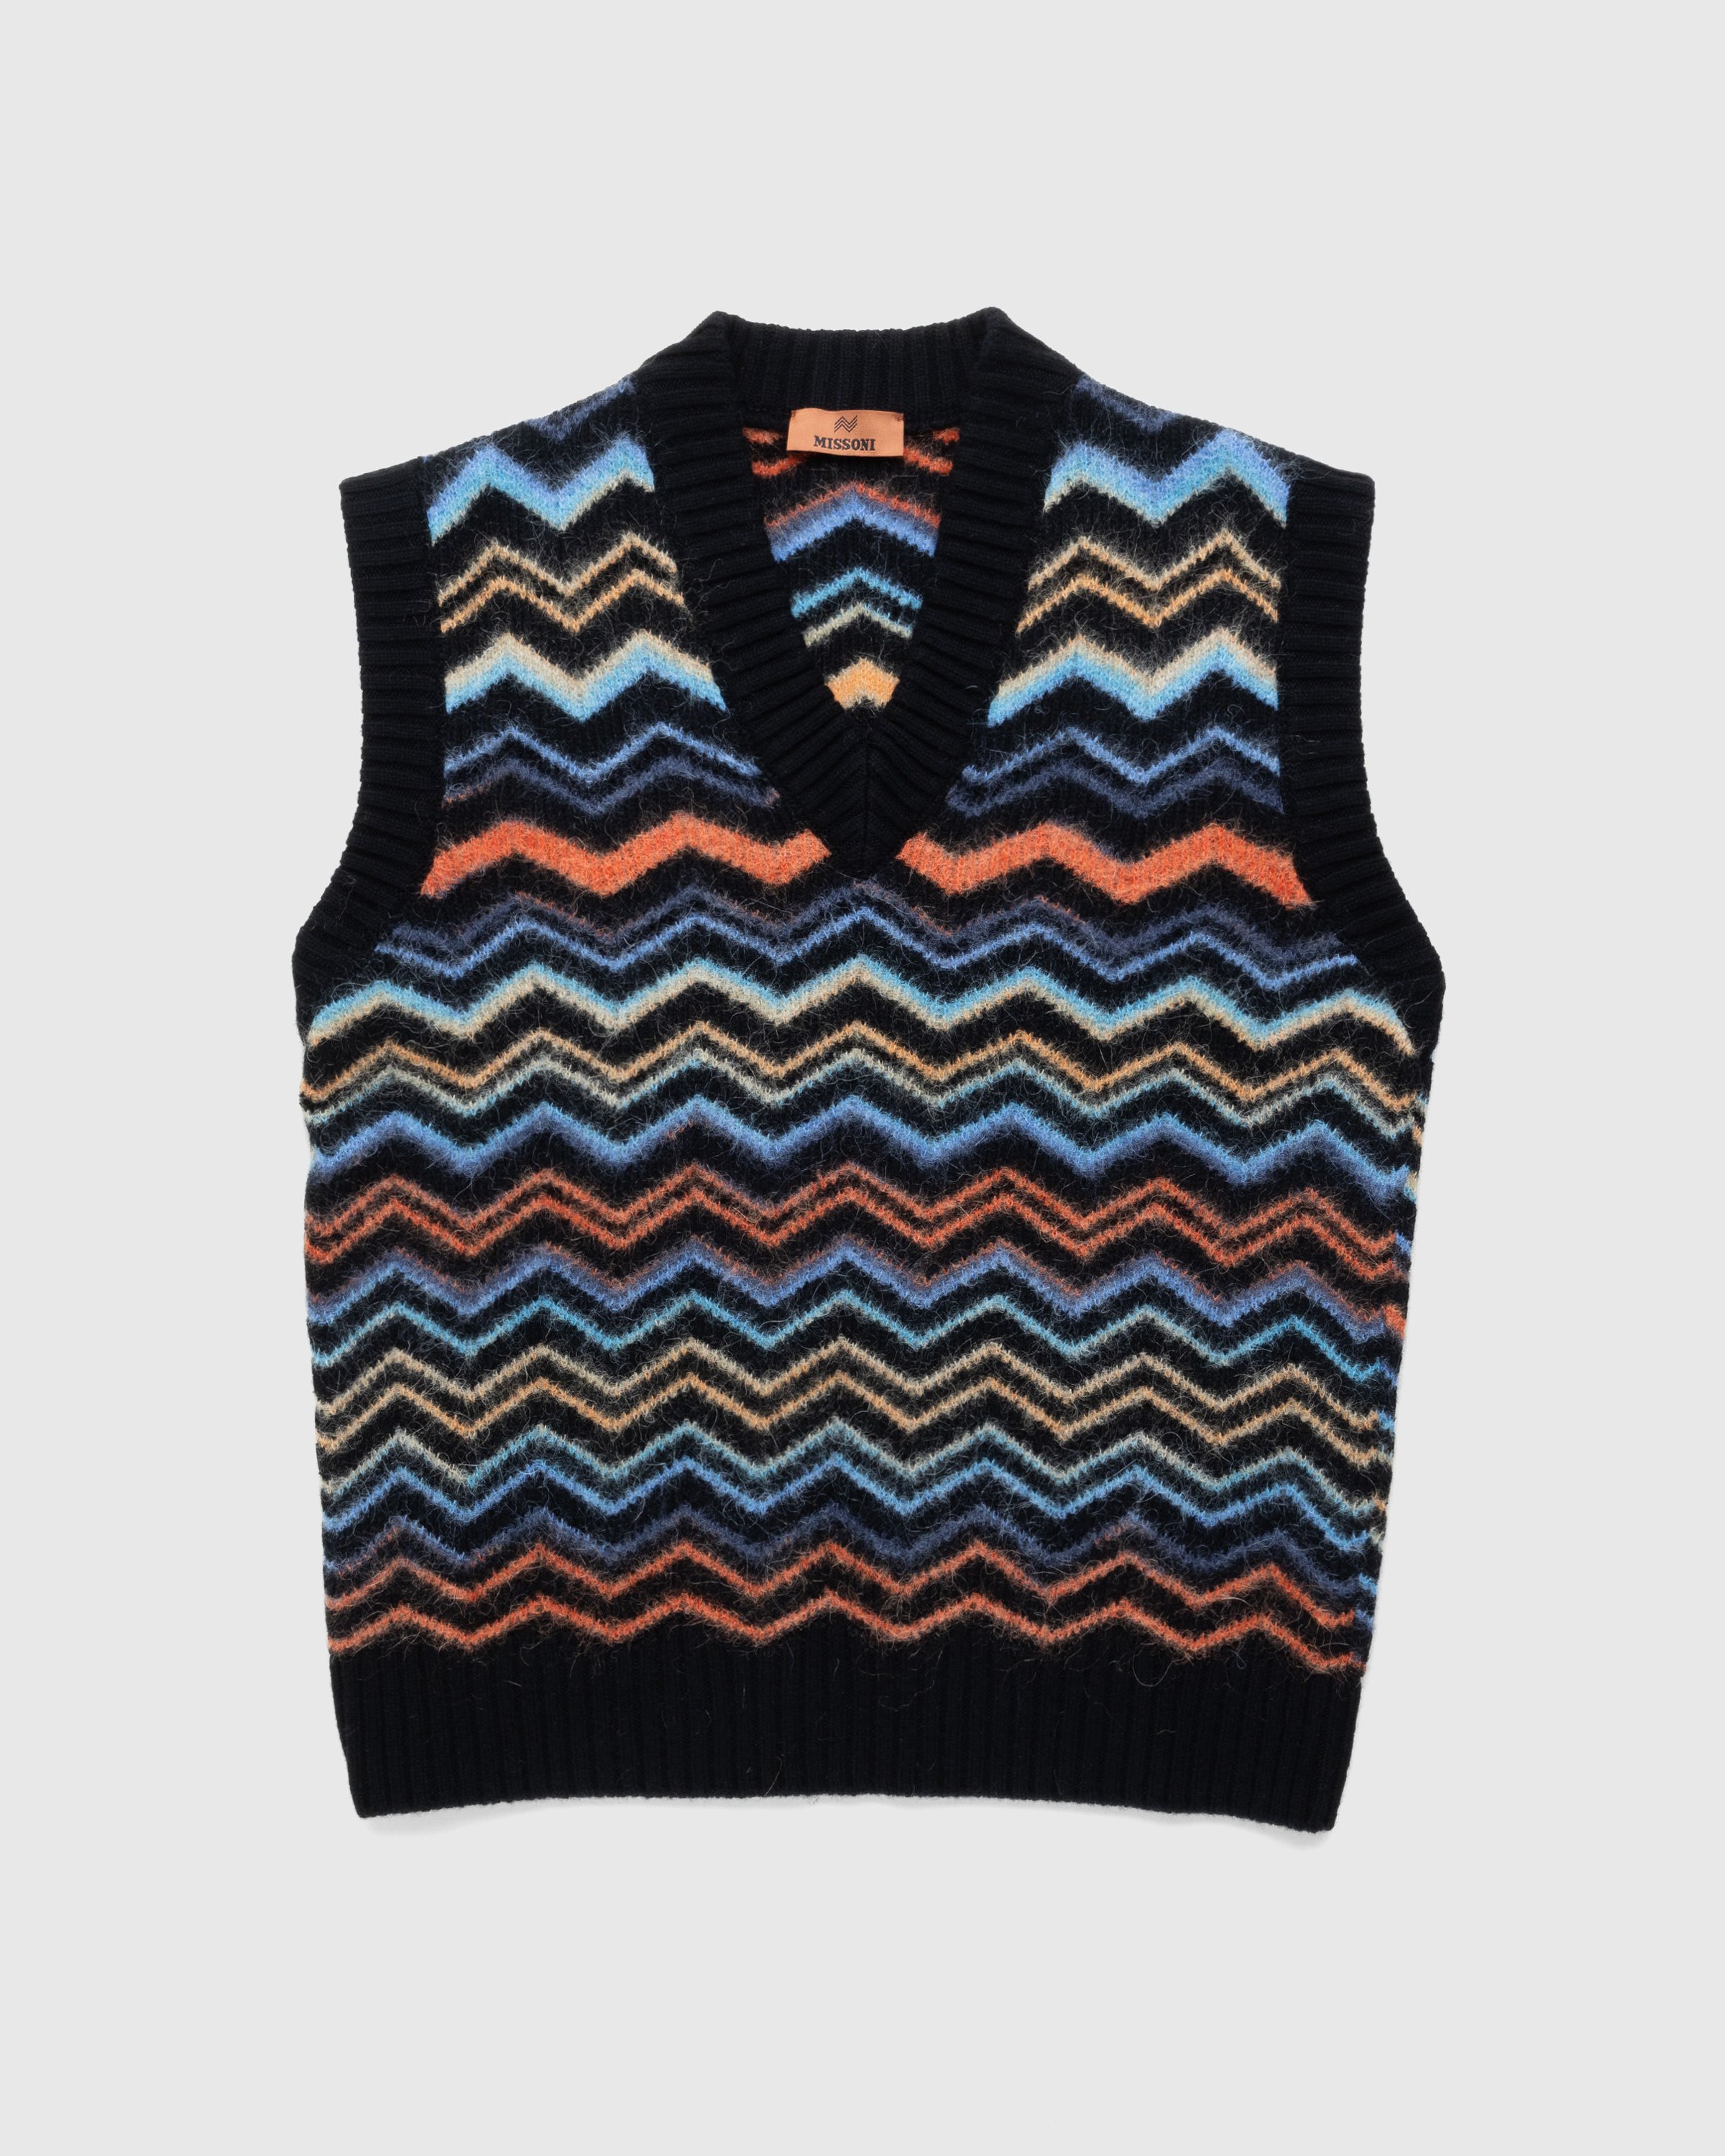 Missoni - Zig Zag Knit Vest Black/Orange/Light Blue - Clothing - Multi - Image 1